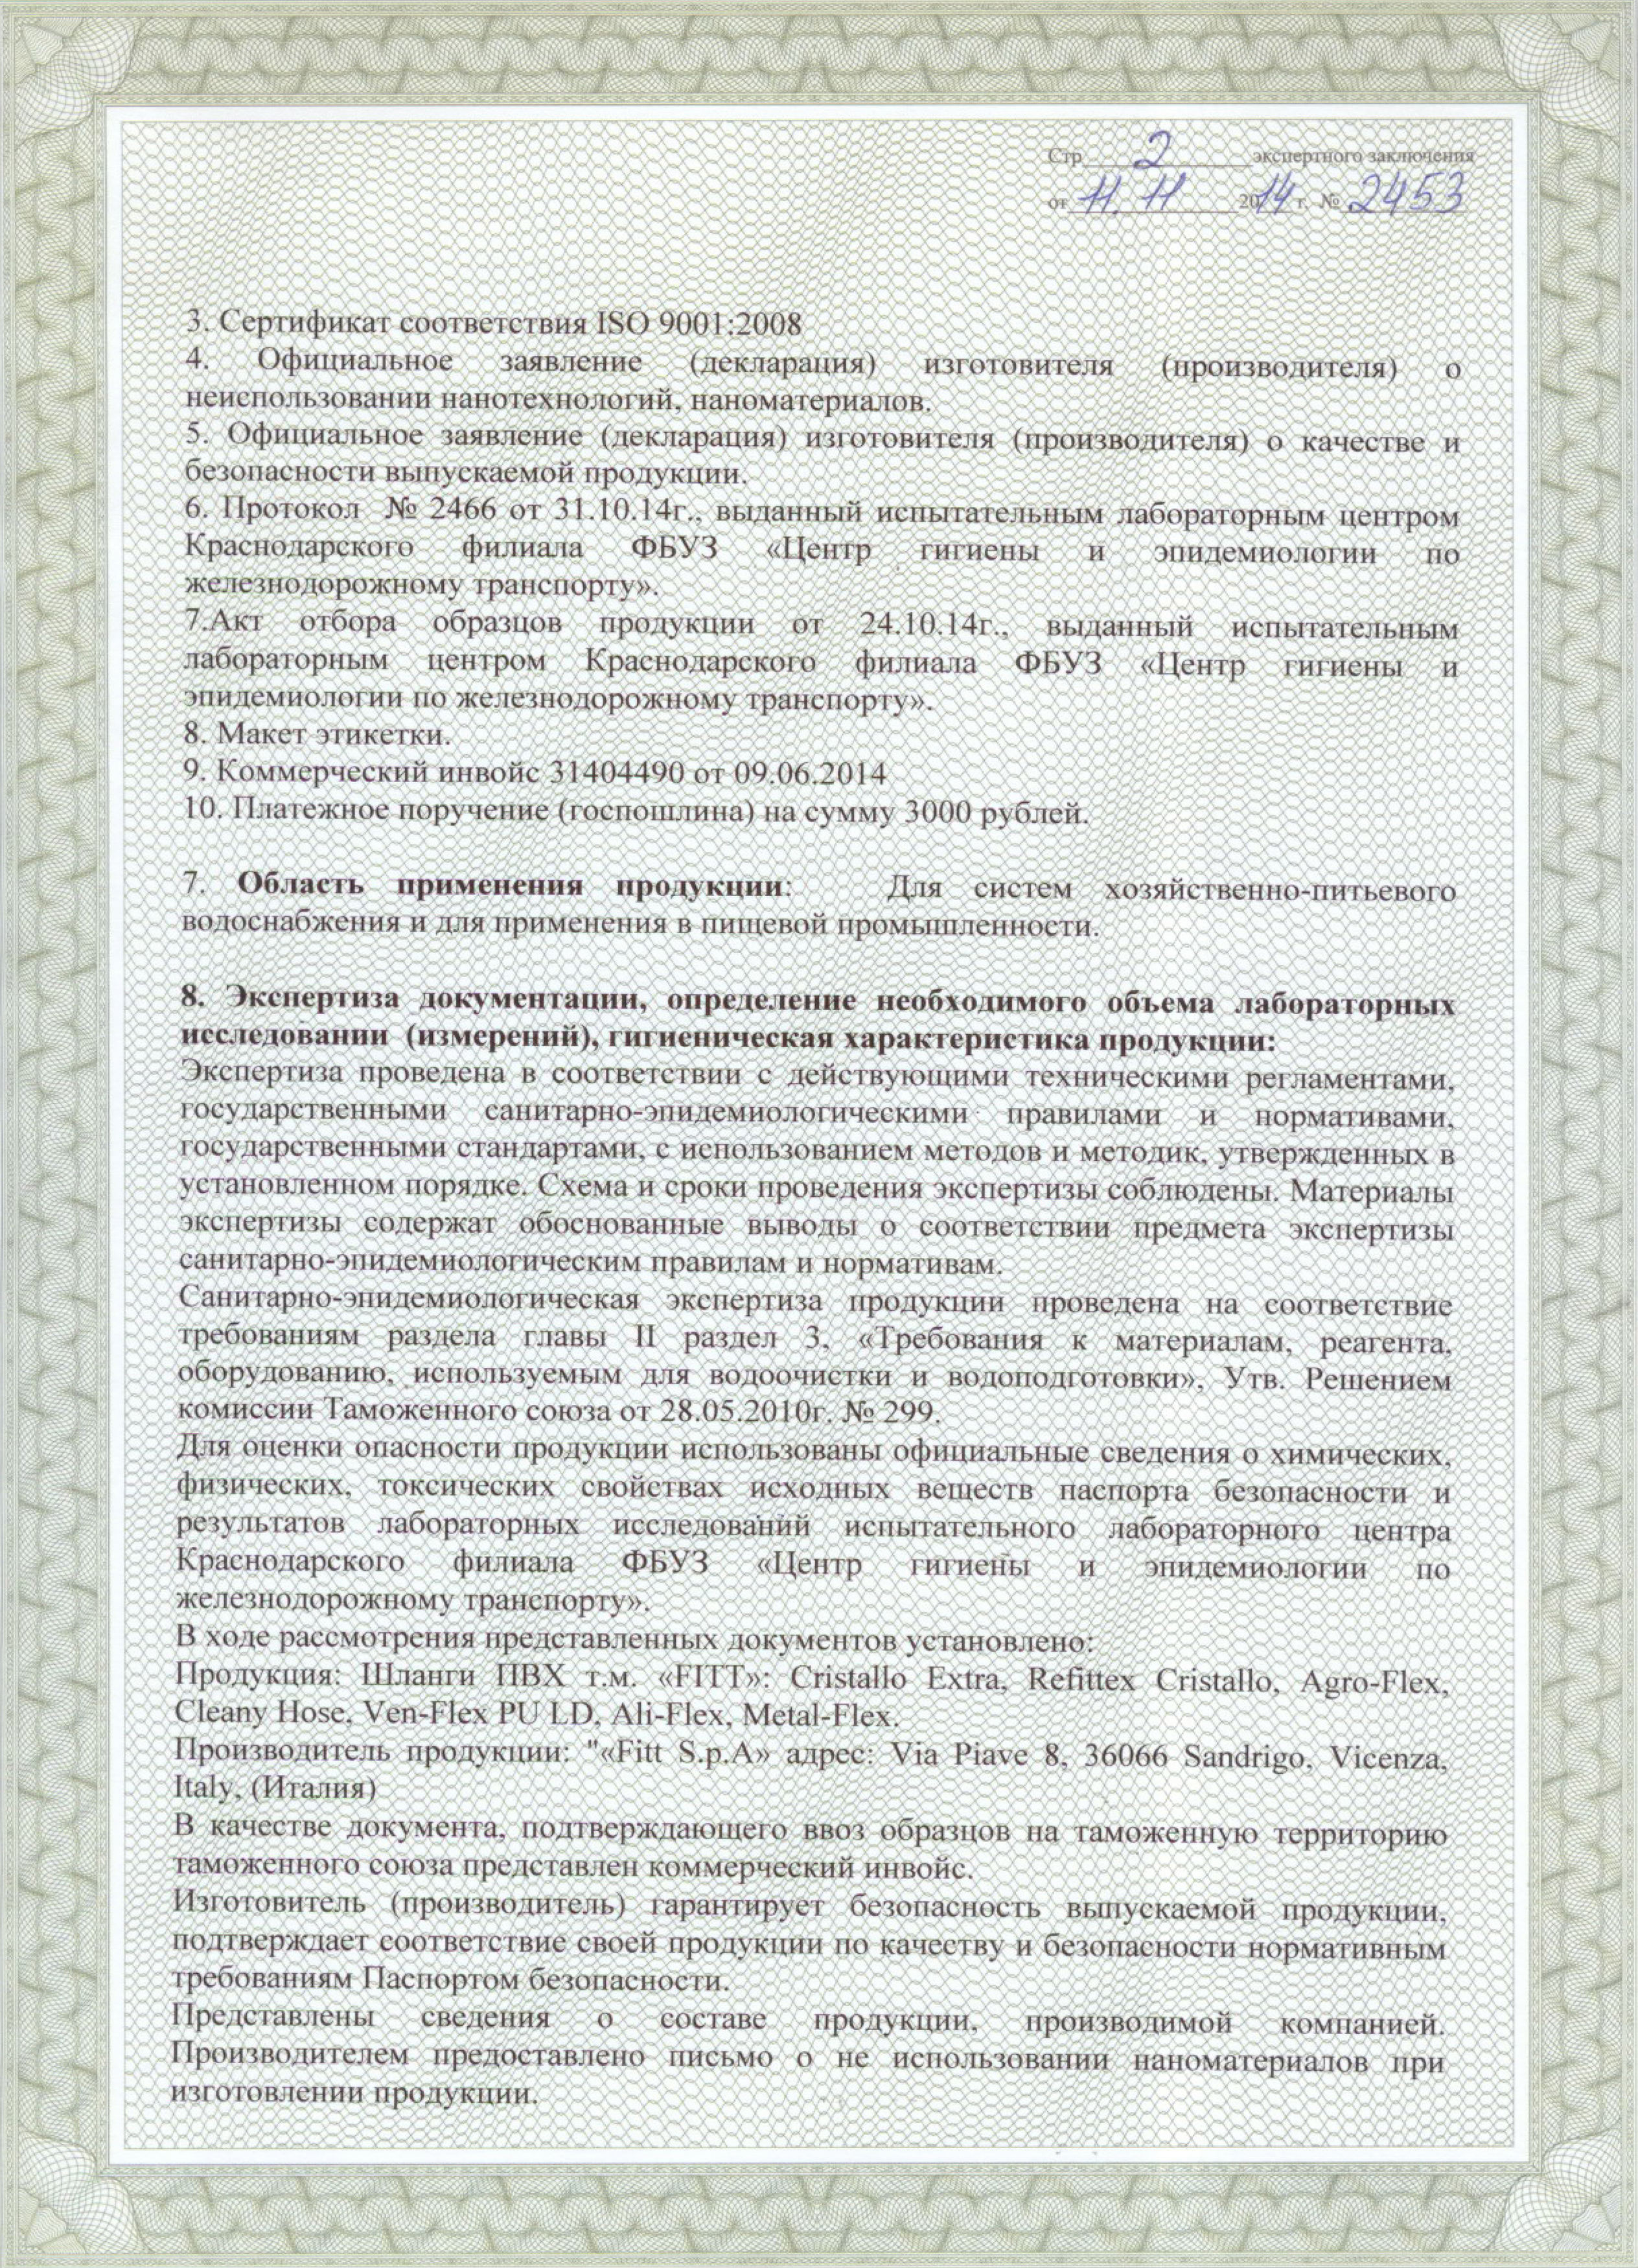 State_registration_Certificate_-_Russia-2.jpg